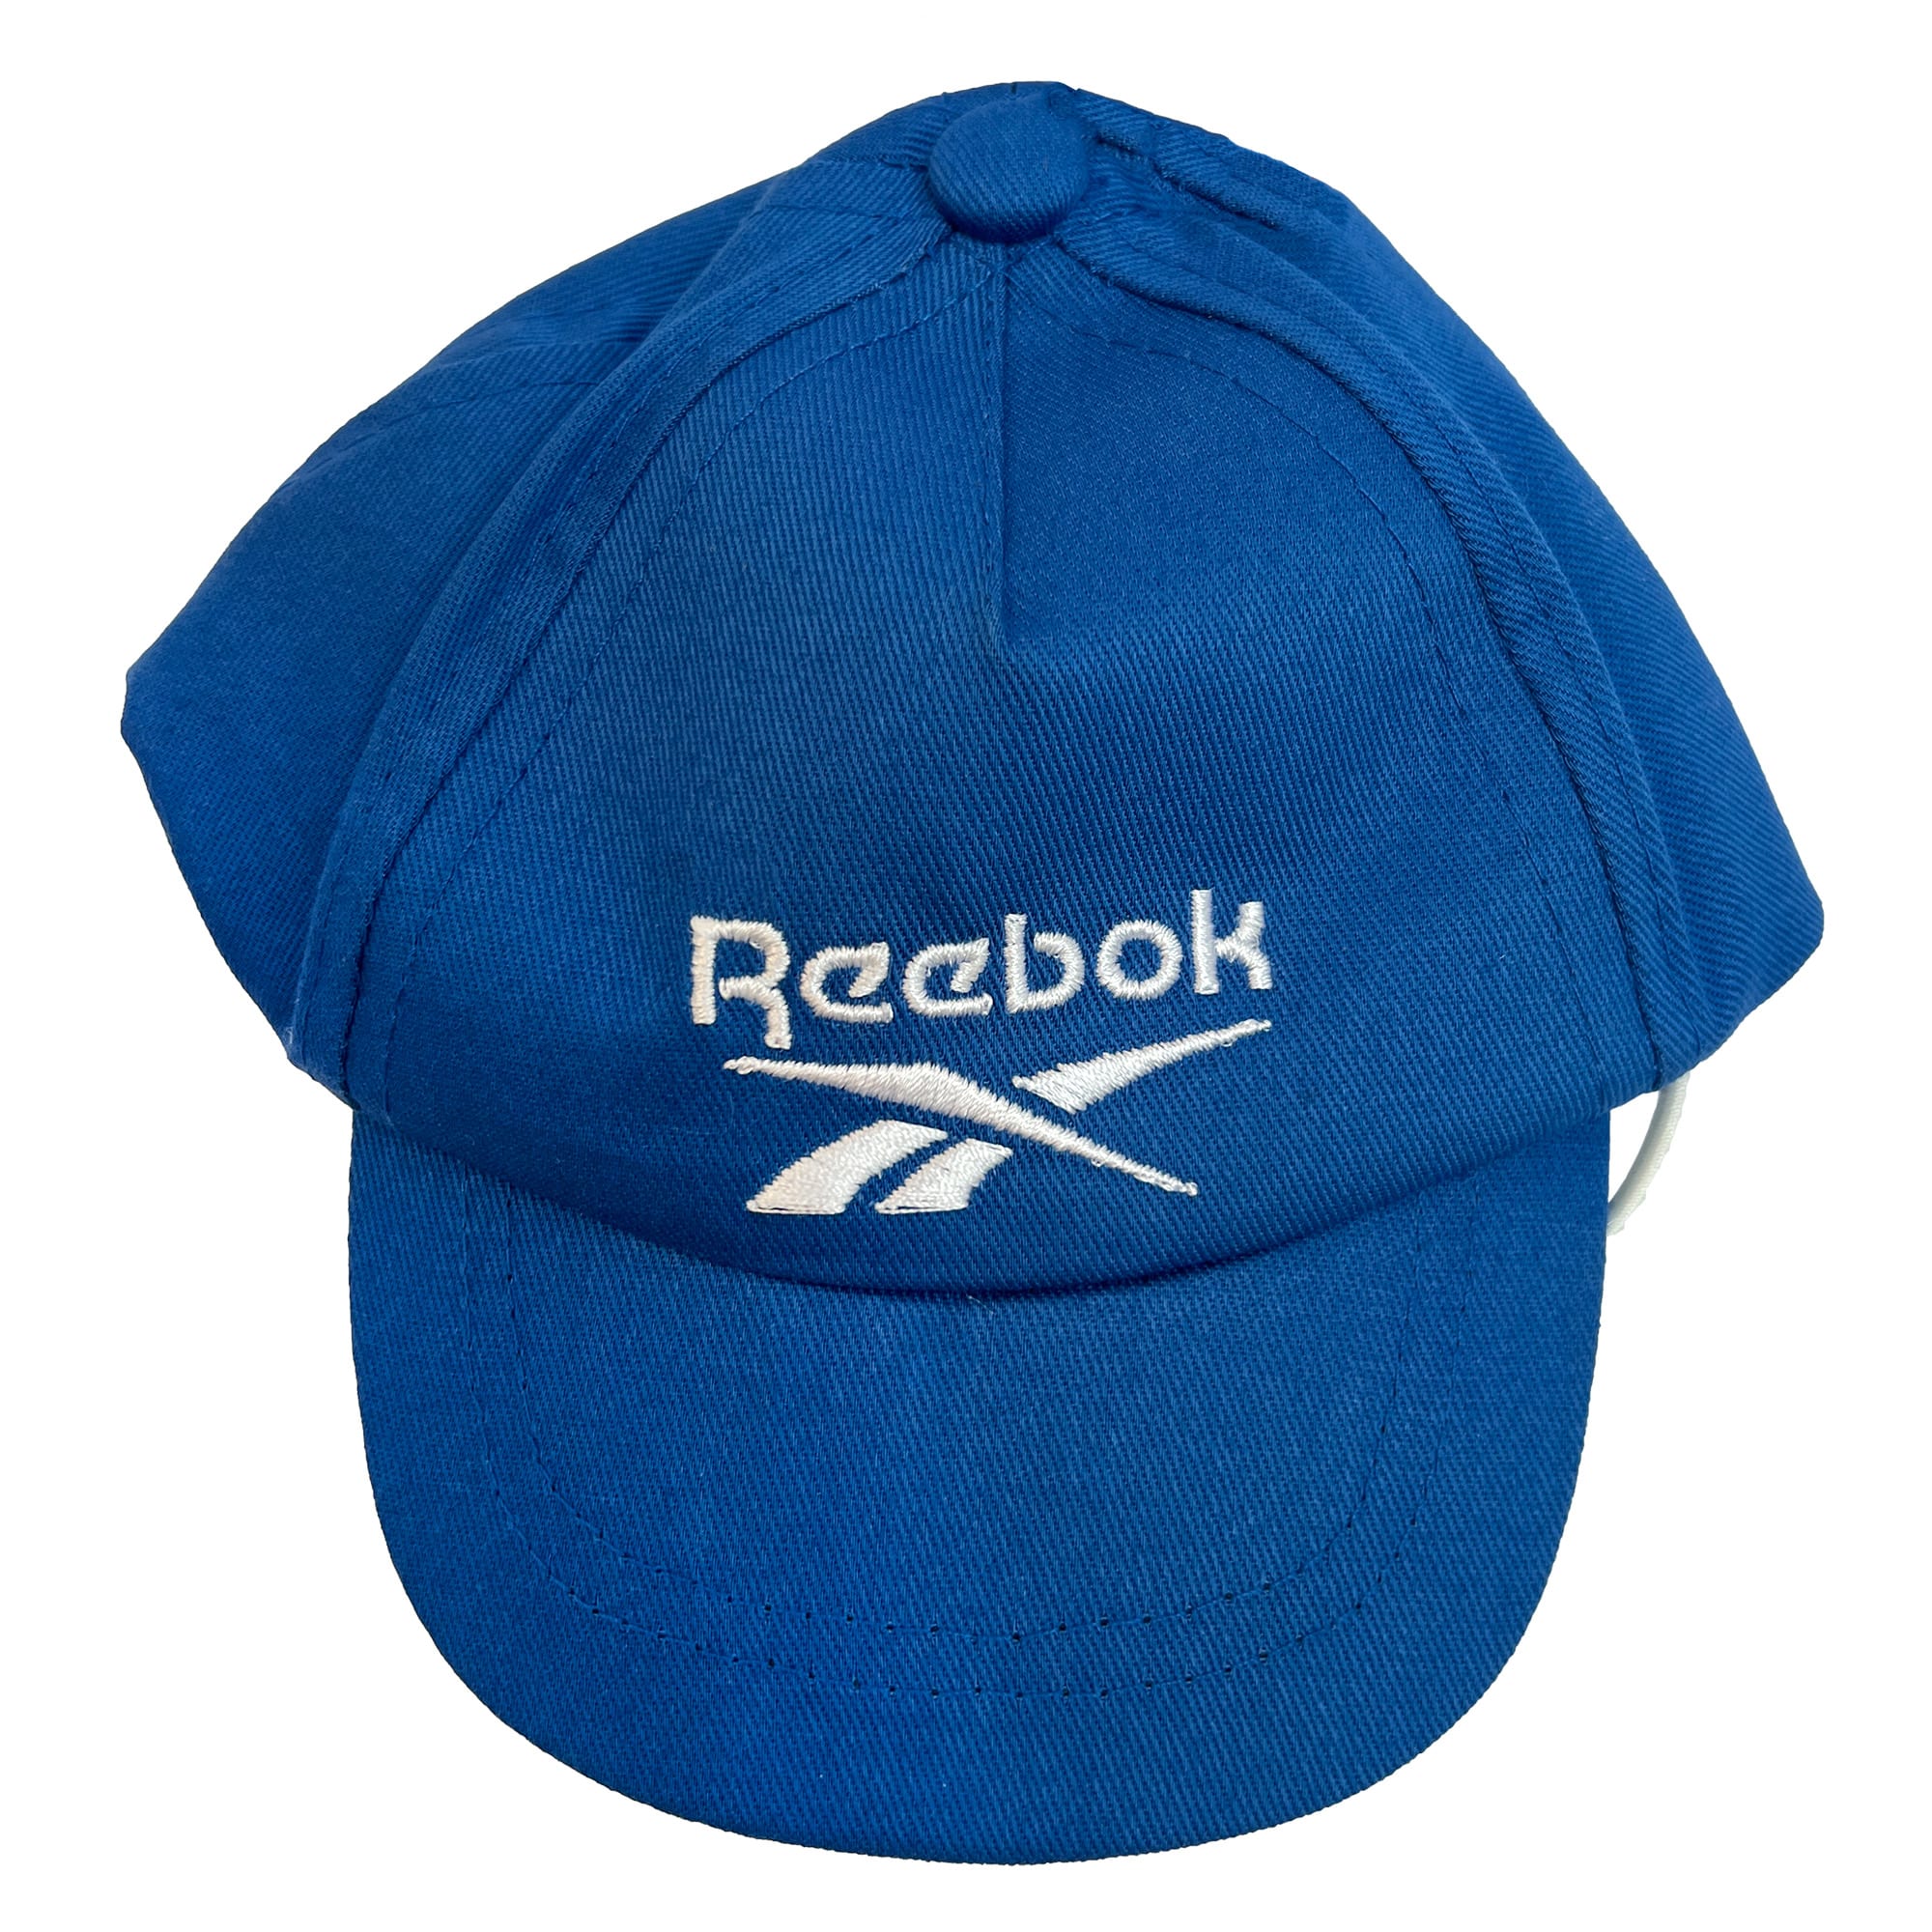 Reebok Blue Baseball Hat for Small/Medium Petco